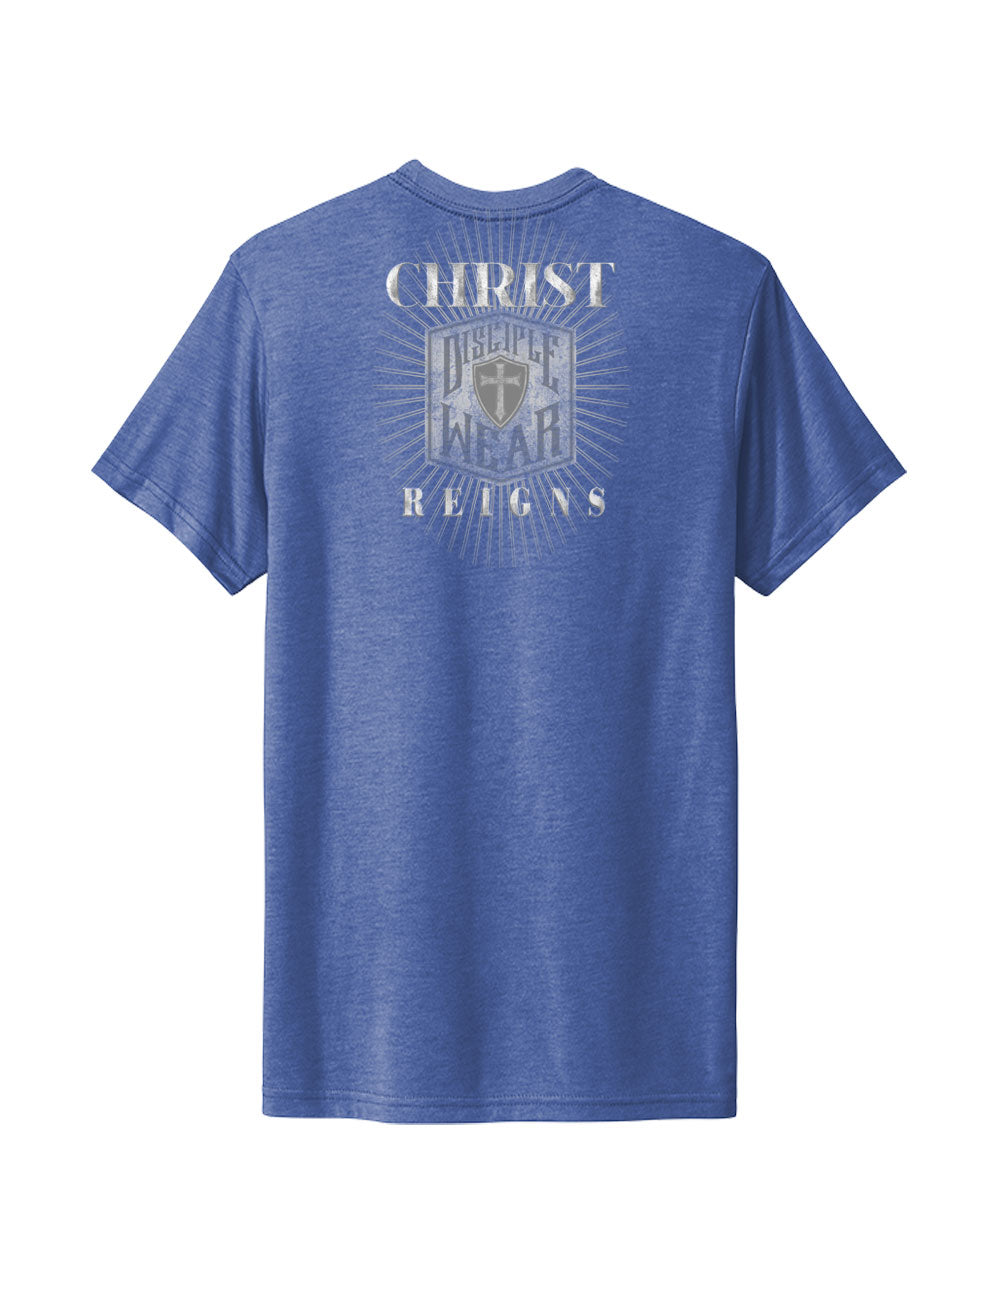 CHRIST REIGNS EAGLE CREST Mens Christian T Shirt back blue